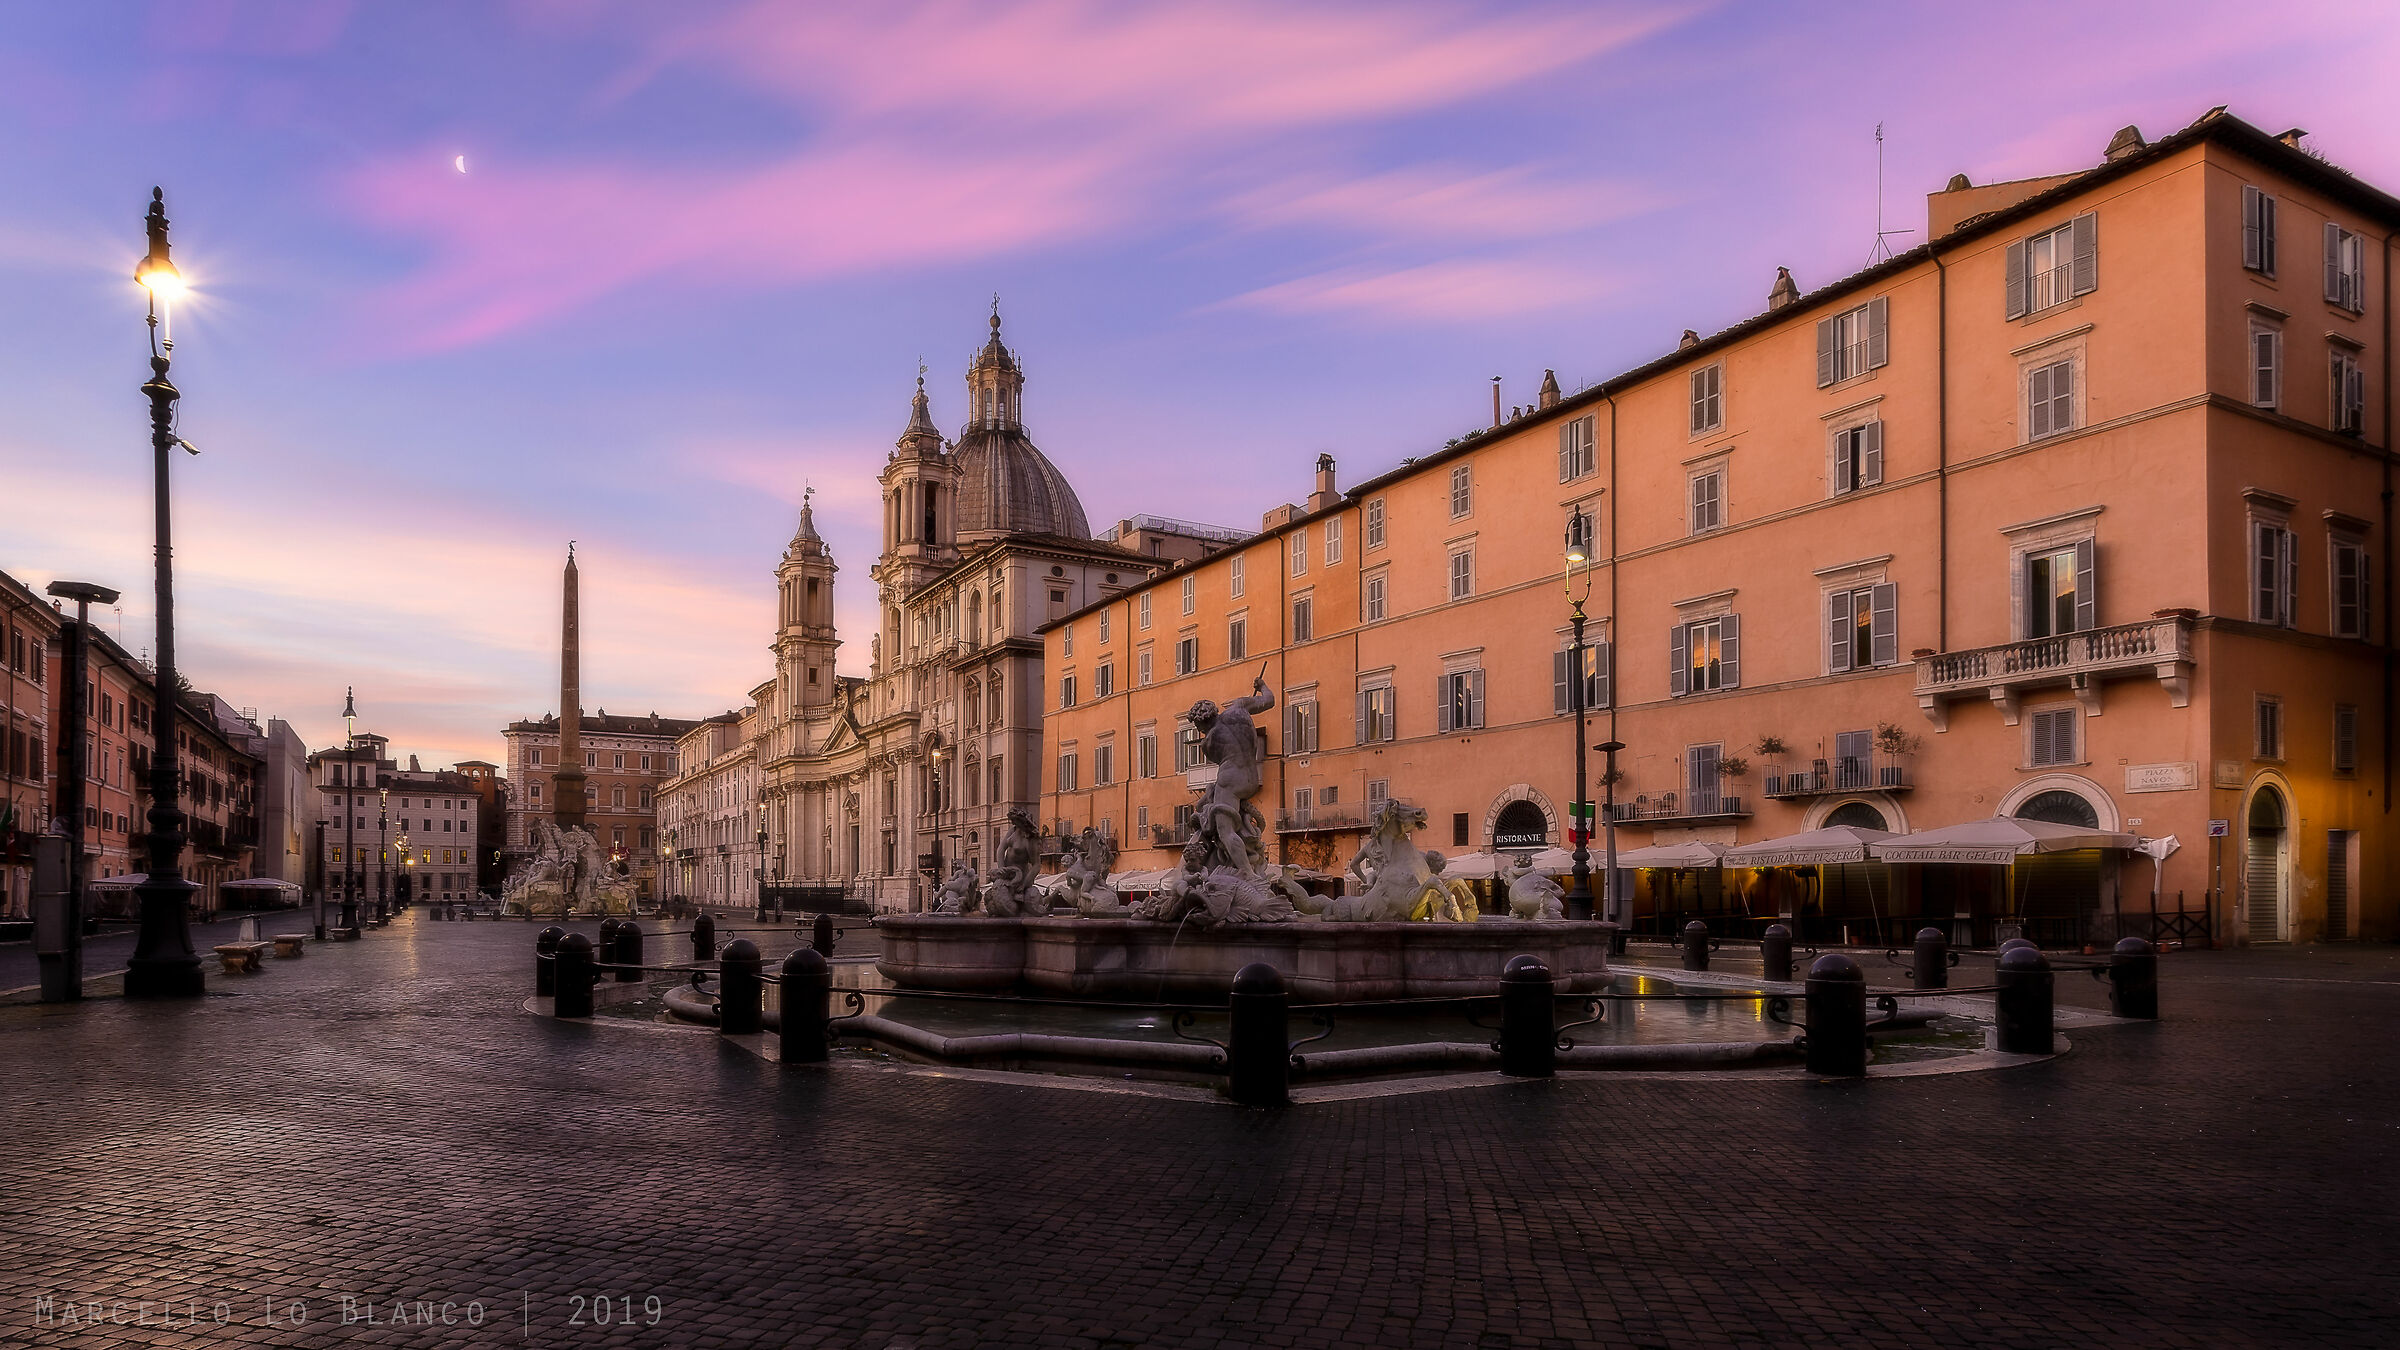 The sunrise at Piazza Navona...